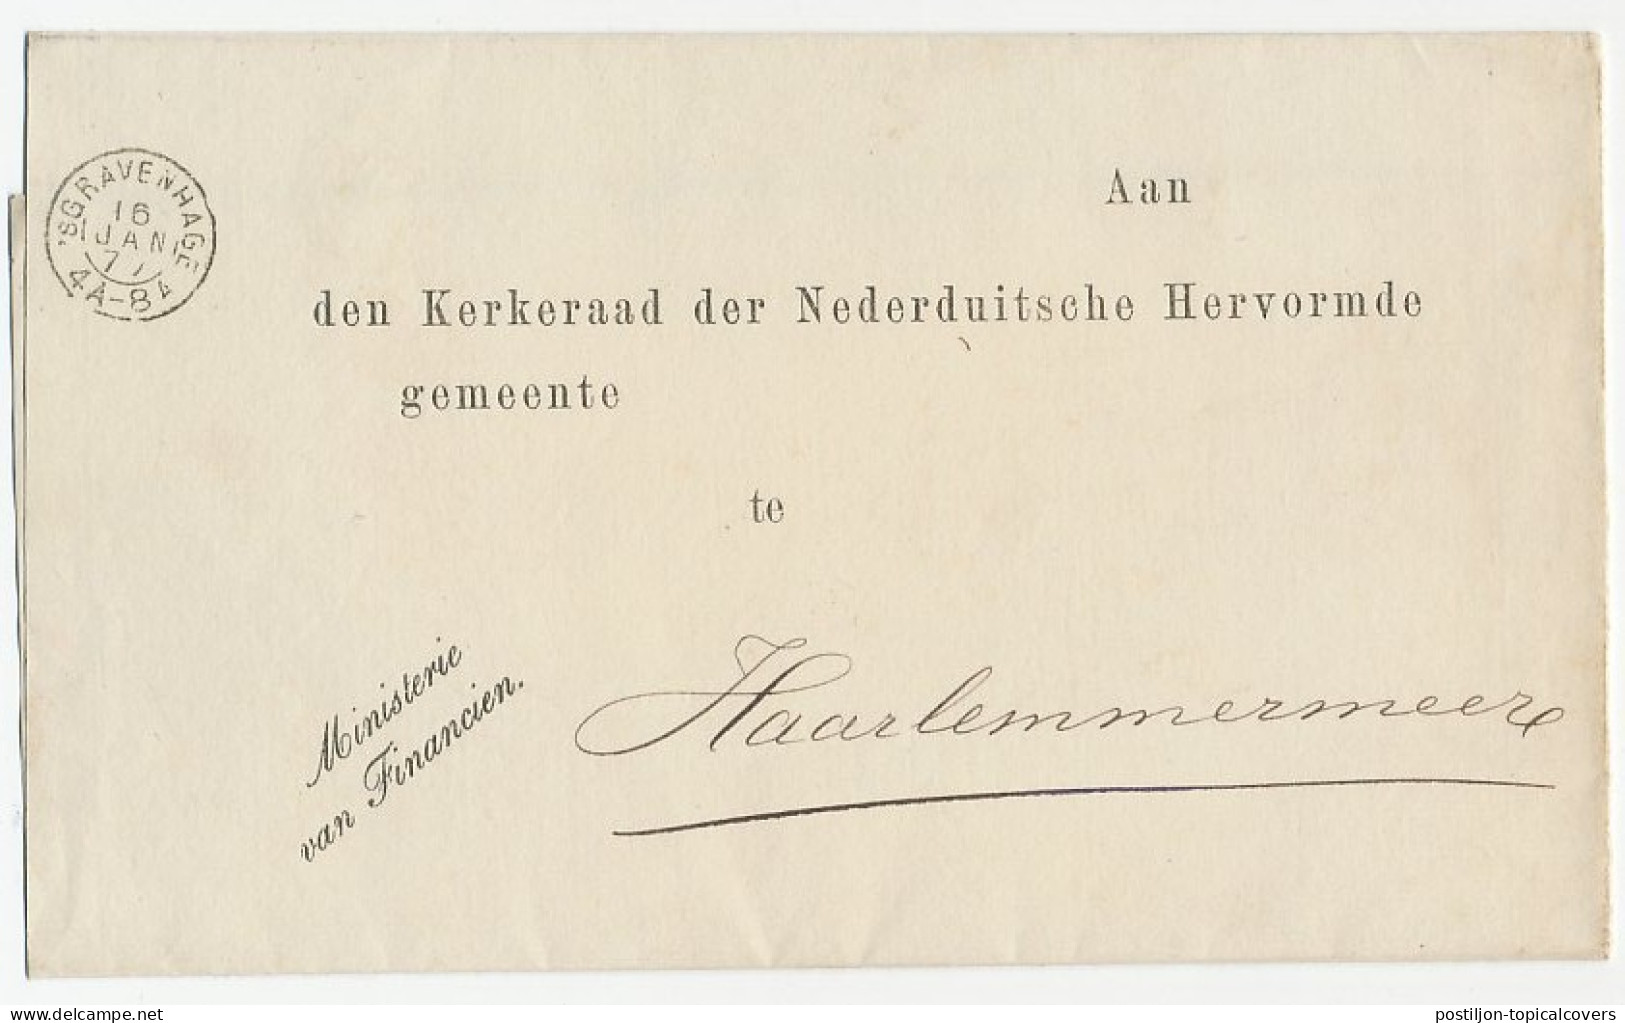 Dienst Den Haag - Haarlemmermeer 1877 - Hervormde Kerk - Unclassified